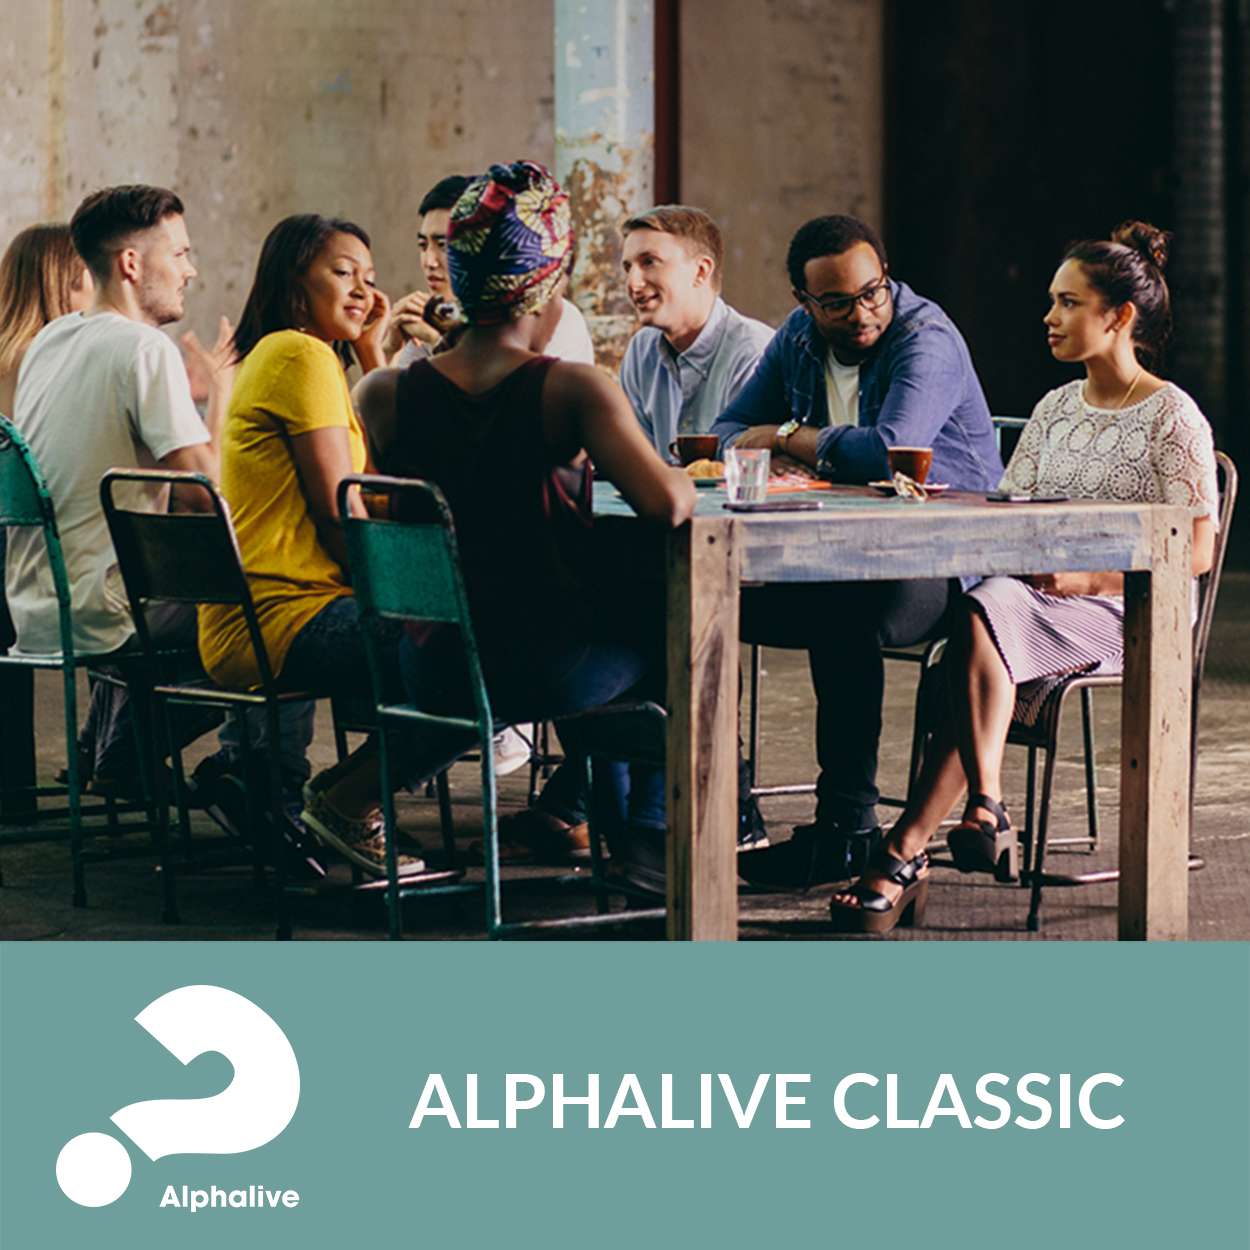 alphalive_classic.jpg